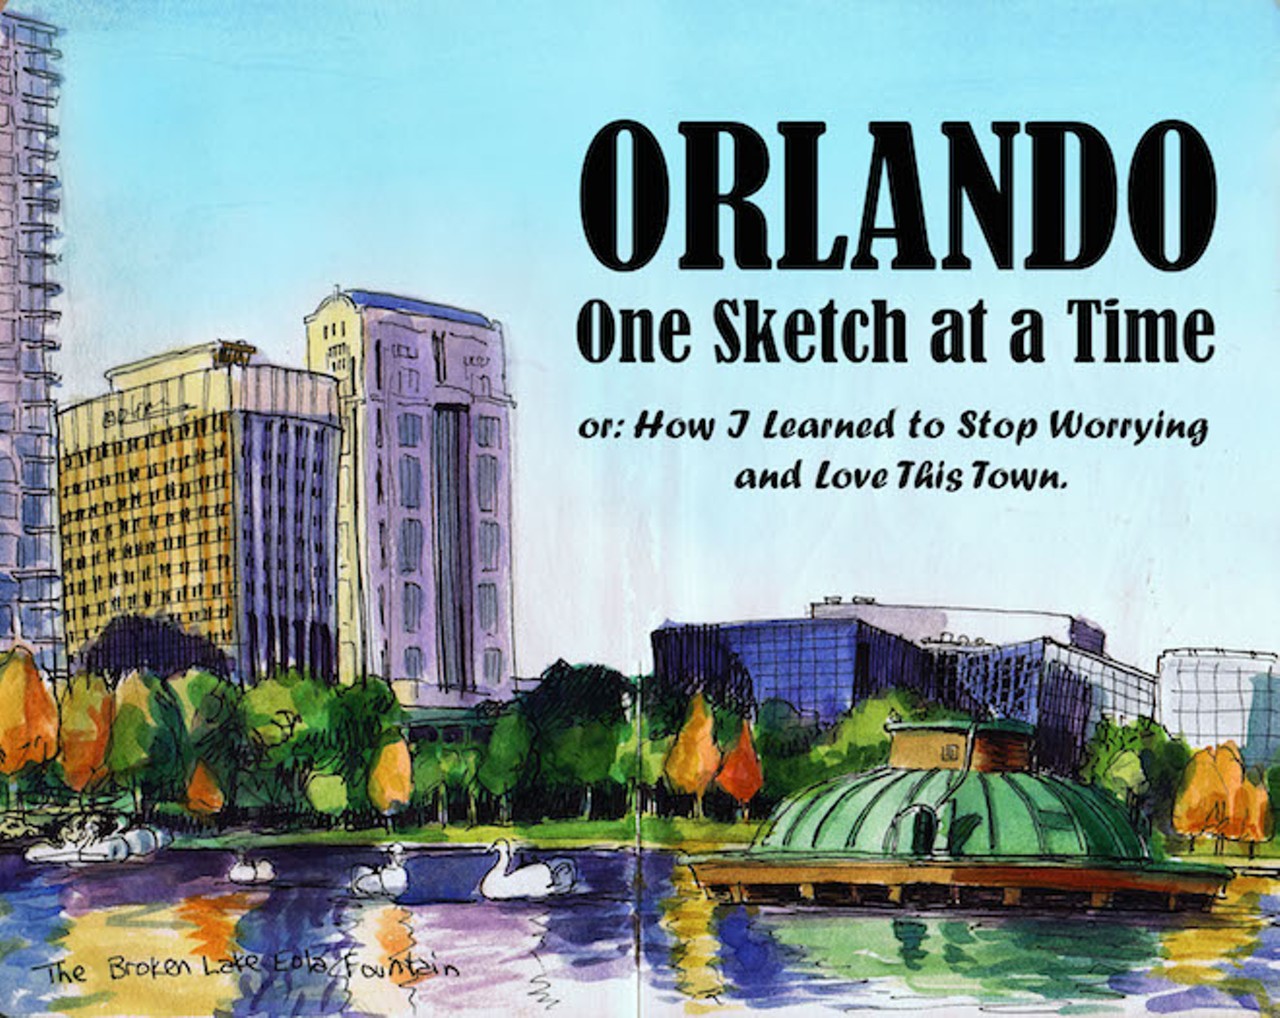 Orlando: One Sketch at a Time
Thomas Thorspecken
www.analogartistdigitalworld.com